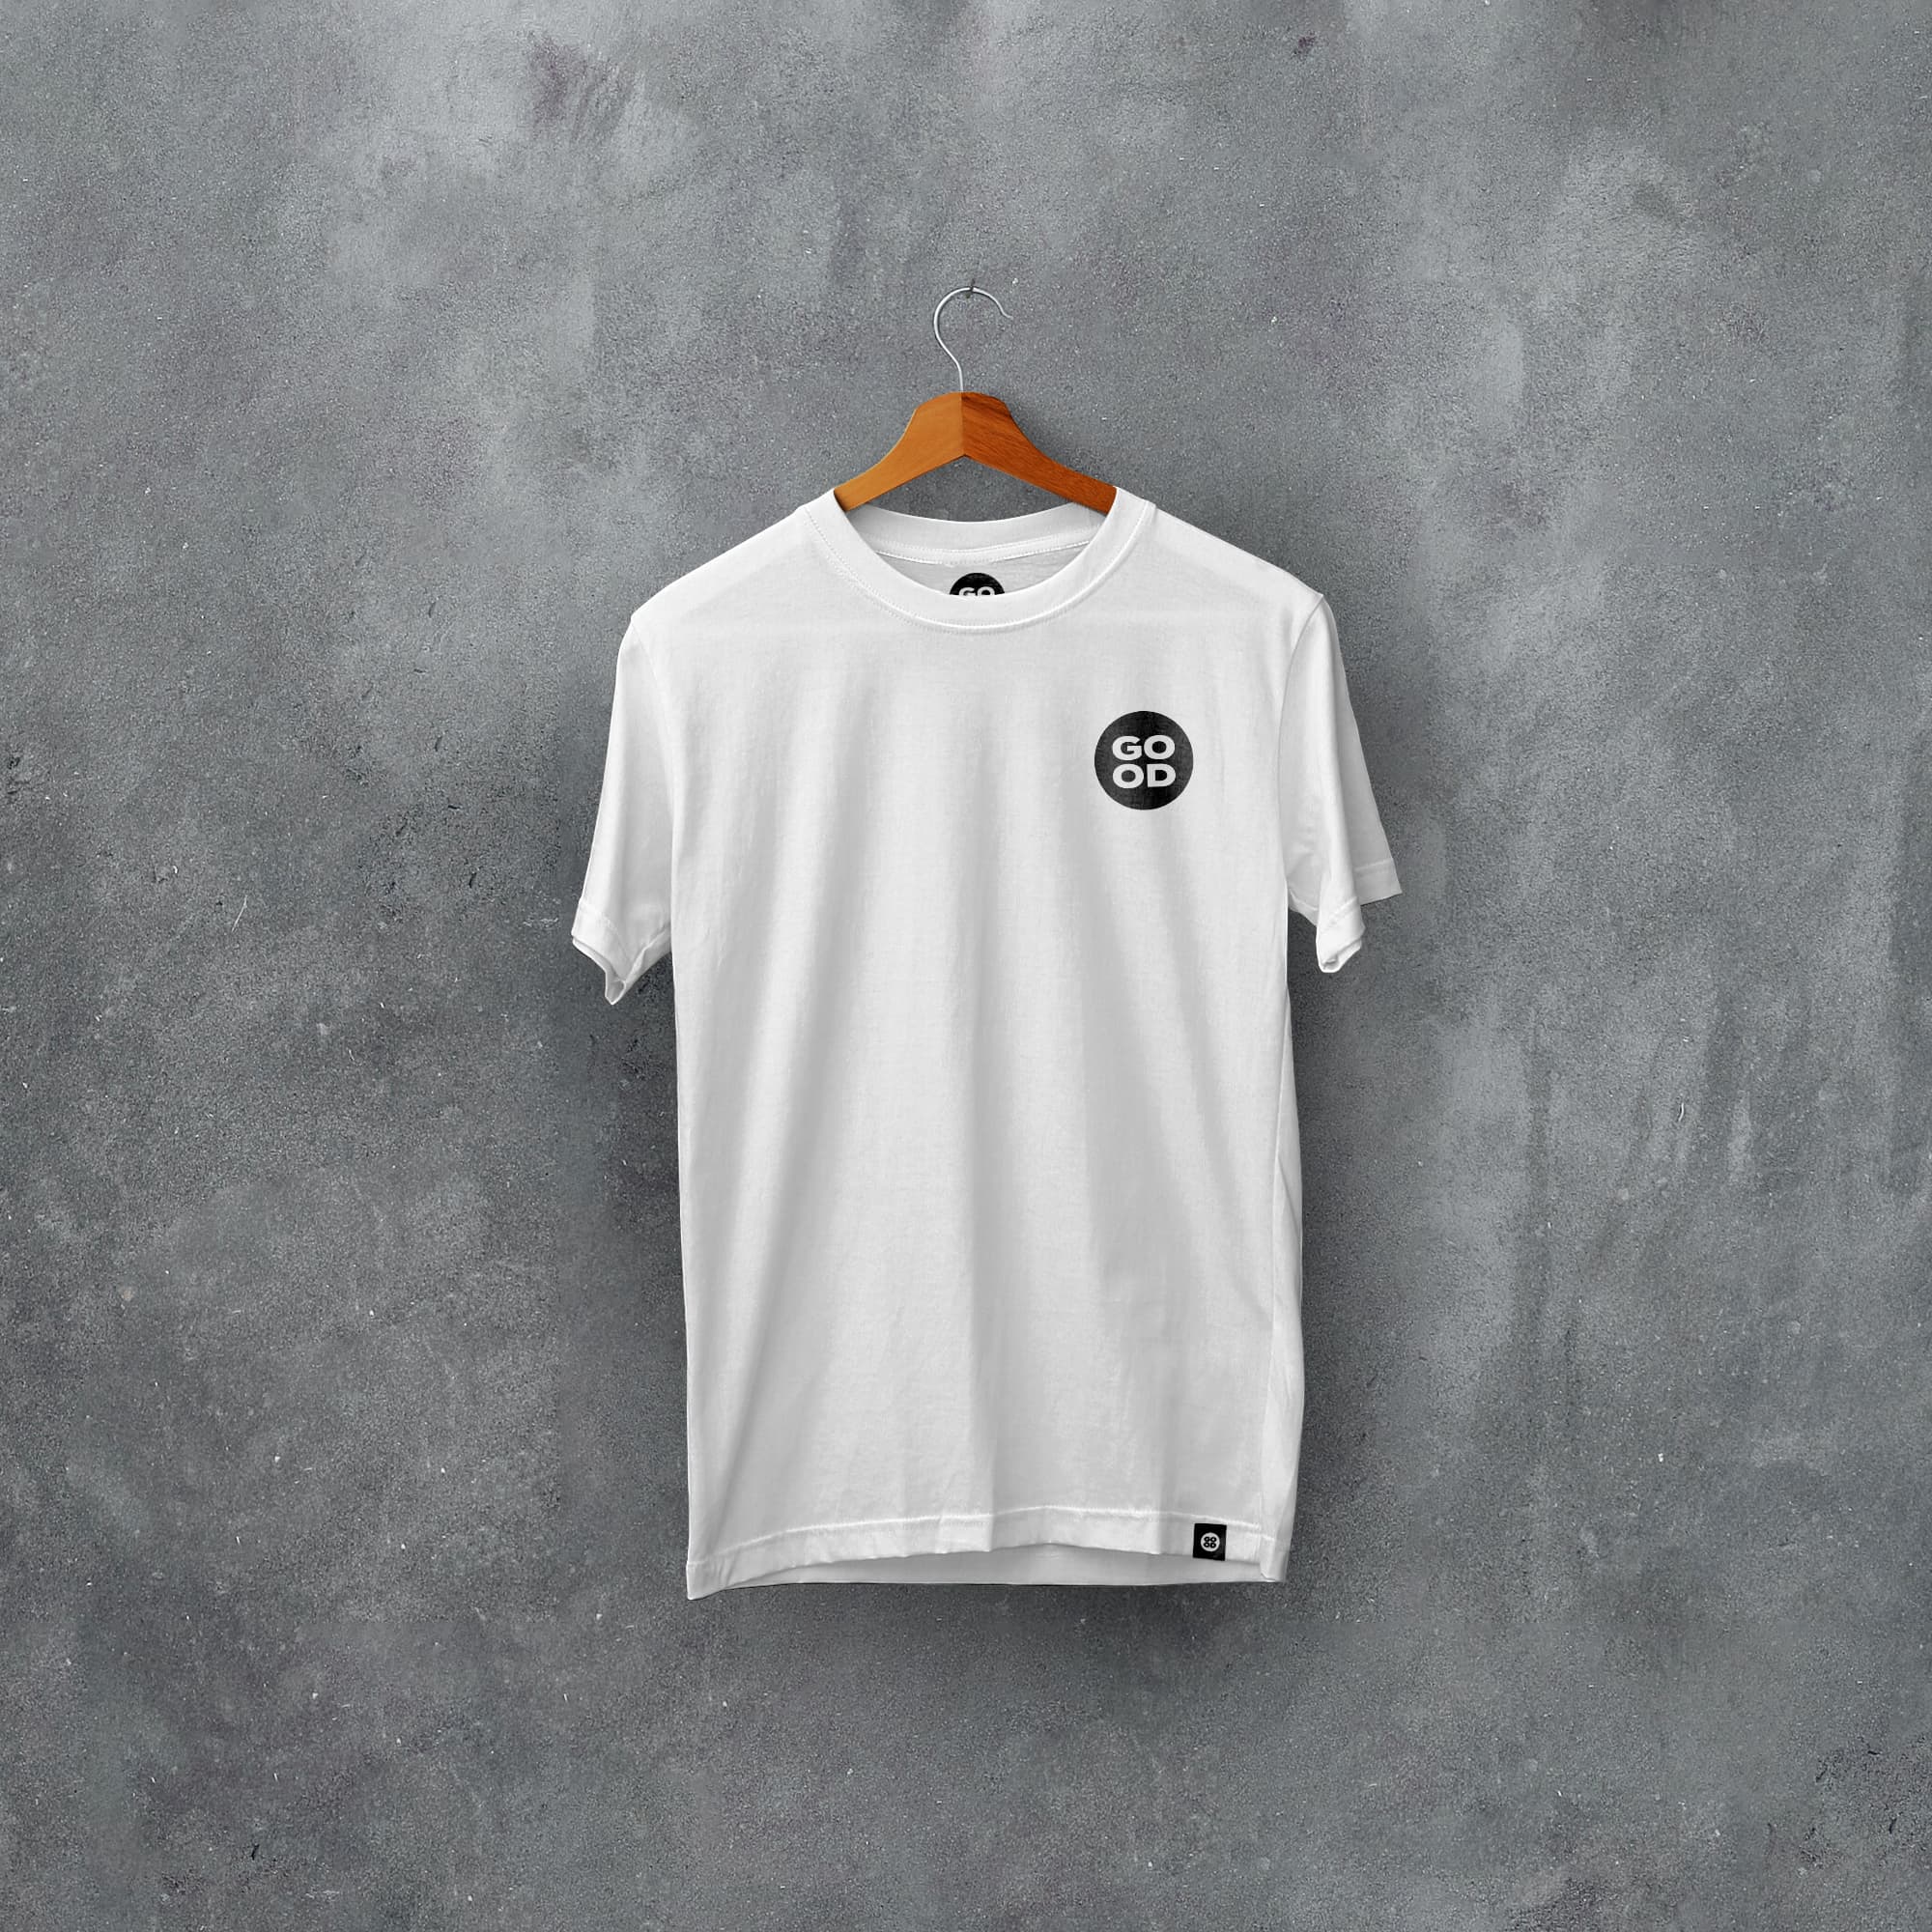 Wales Classic Kits Football T-Shirt